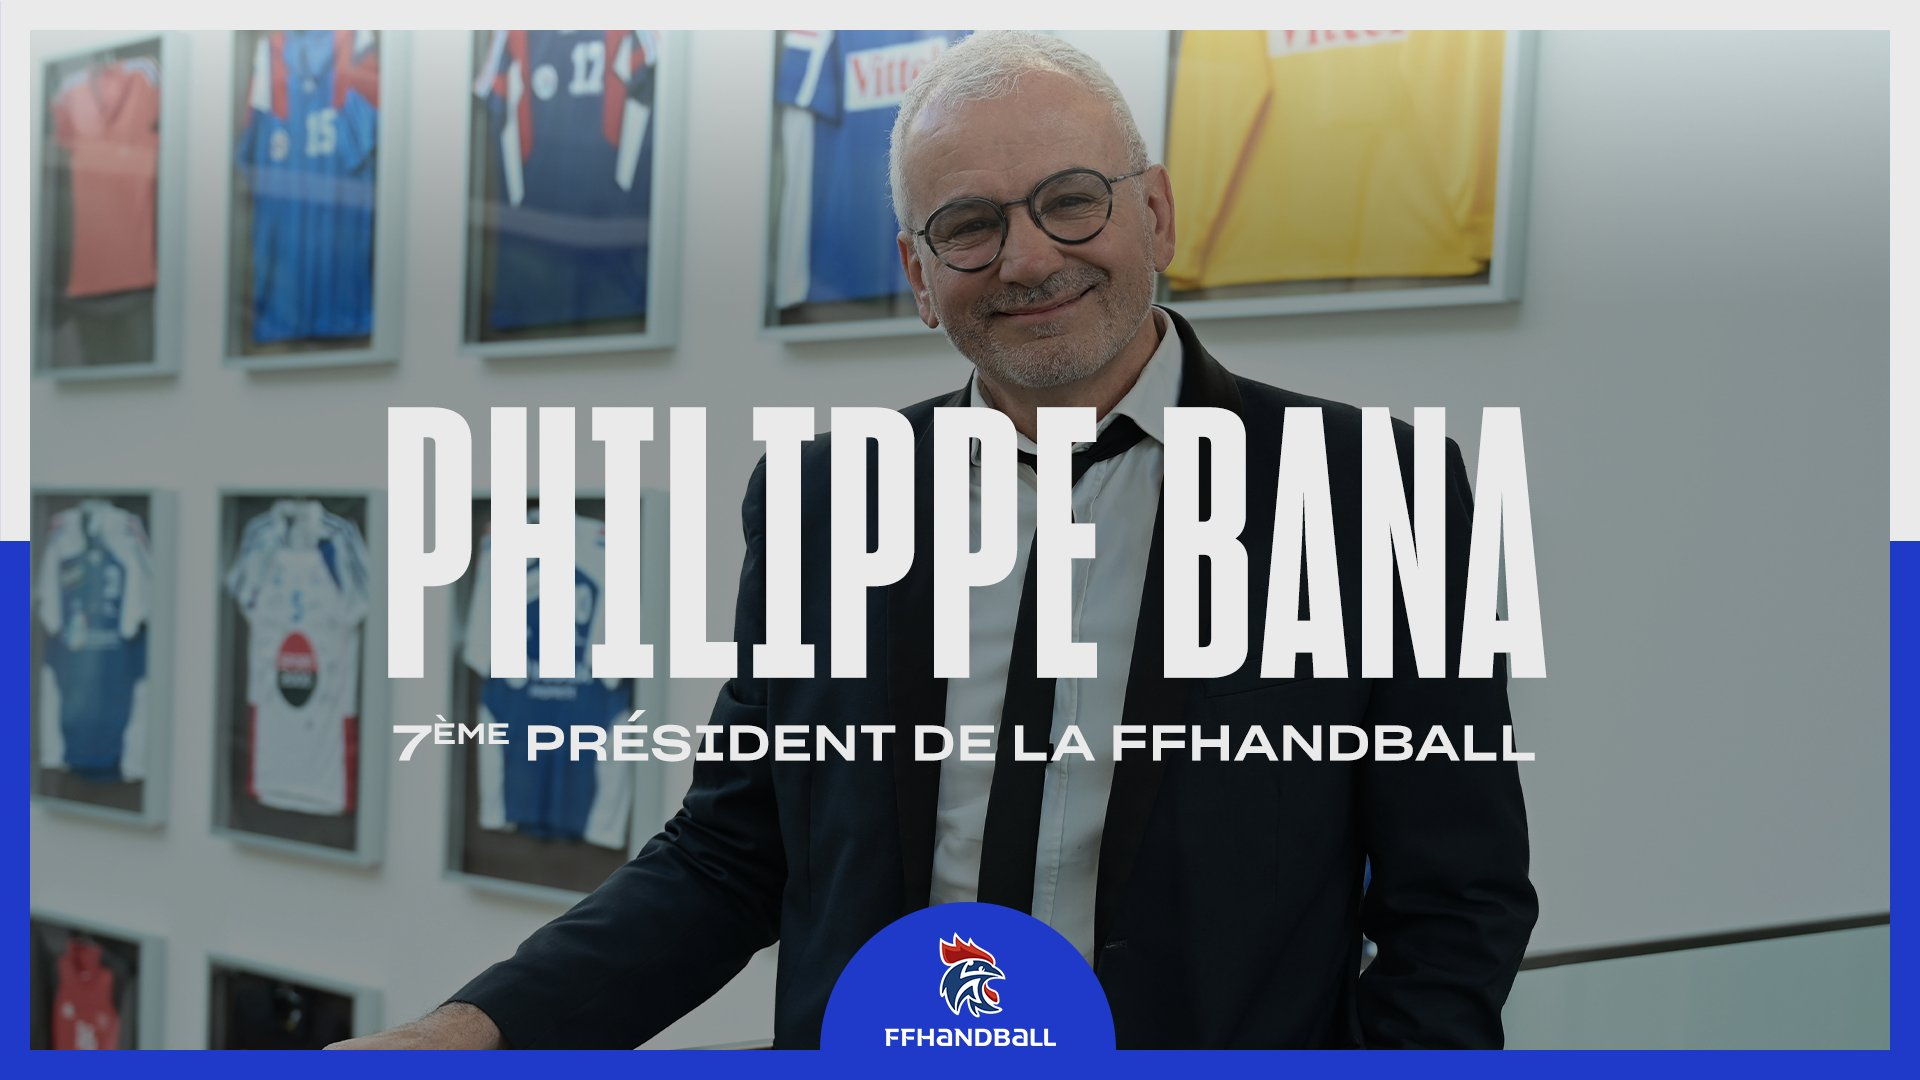 Philippe Bana has been elected President of the French Handball Federation ©FFHandball/Hervé Bellenger